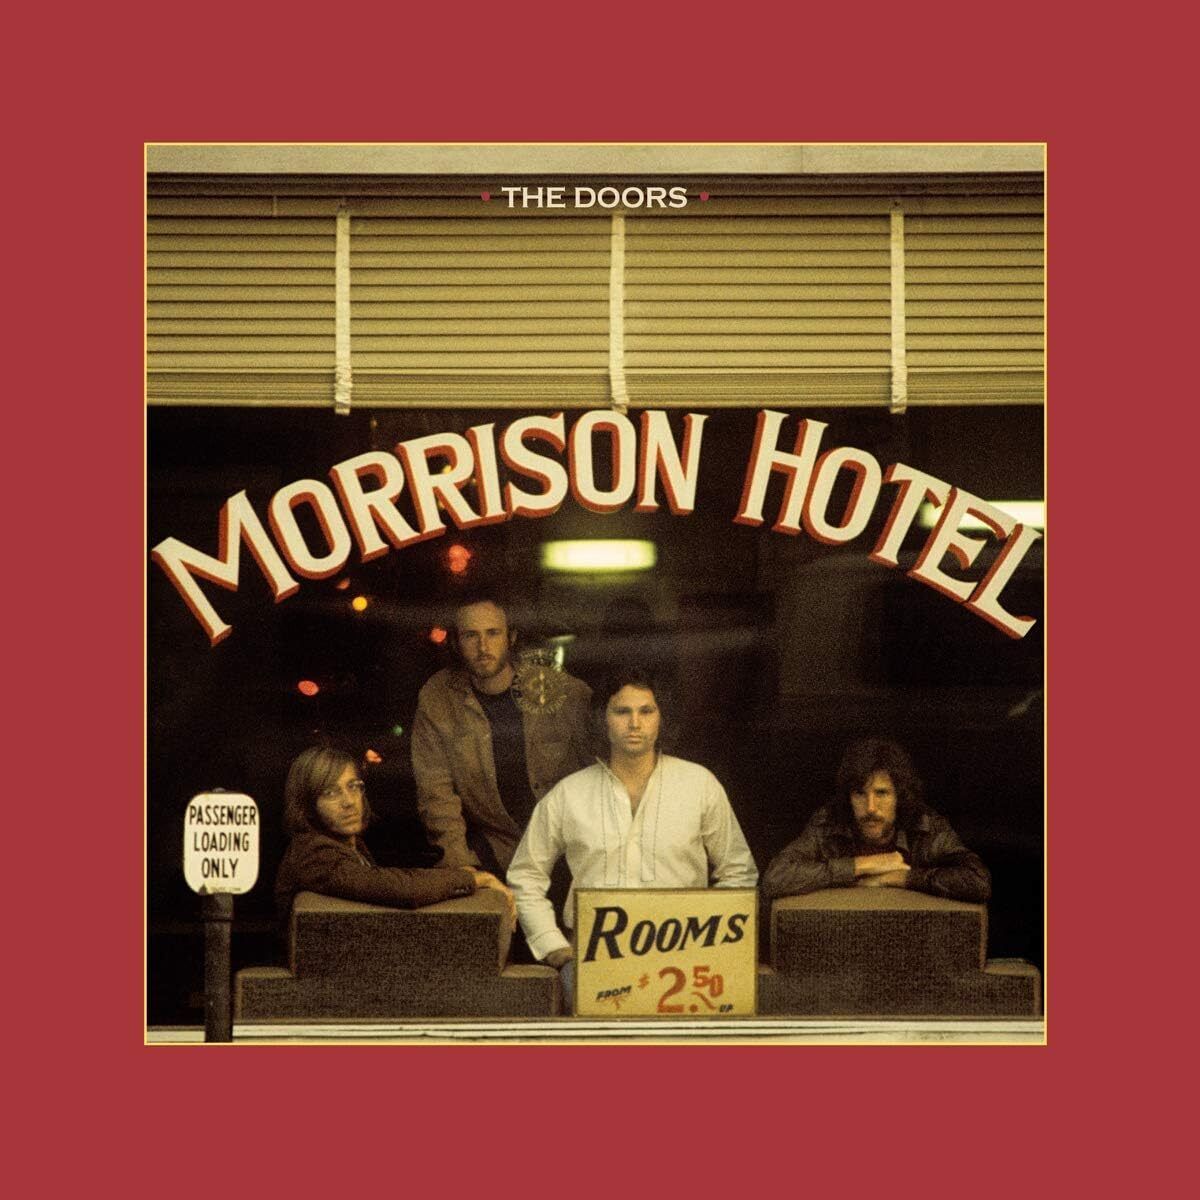 The Doors - Morrison Hotel 50th Anniversary